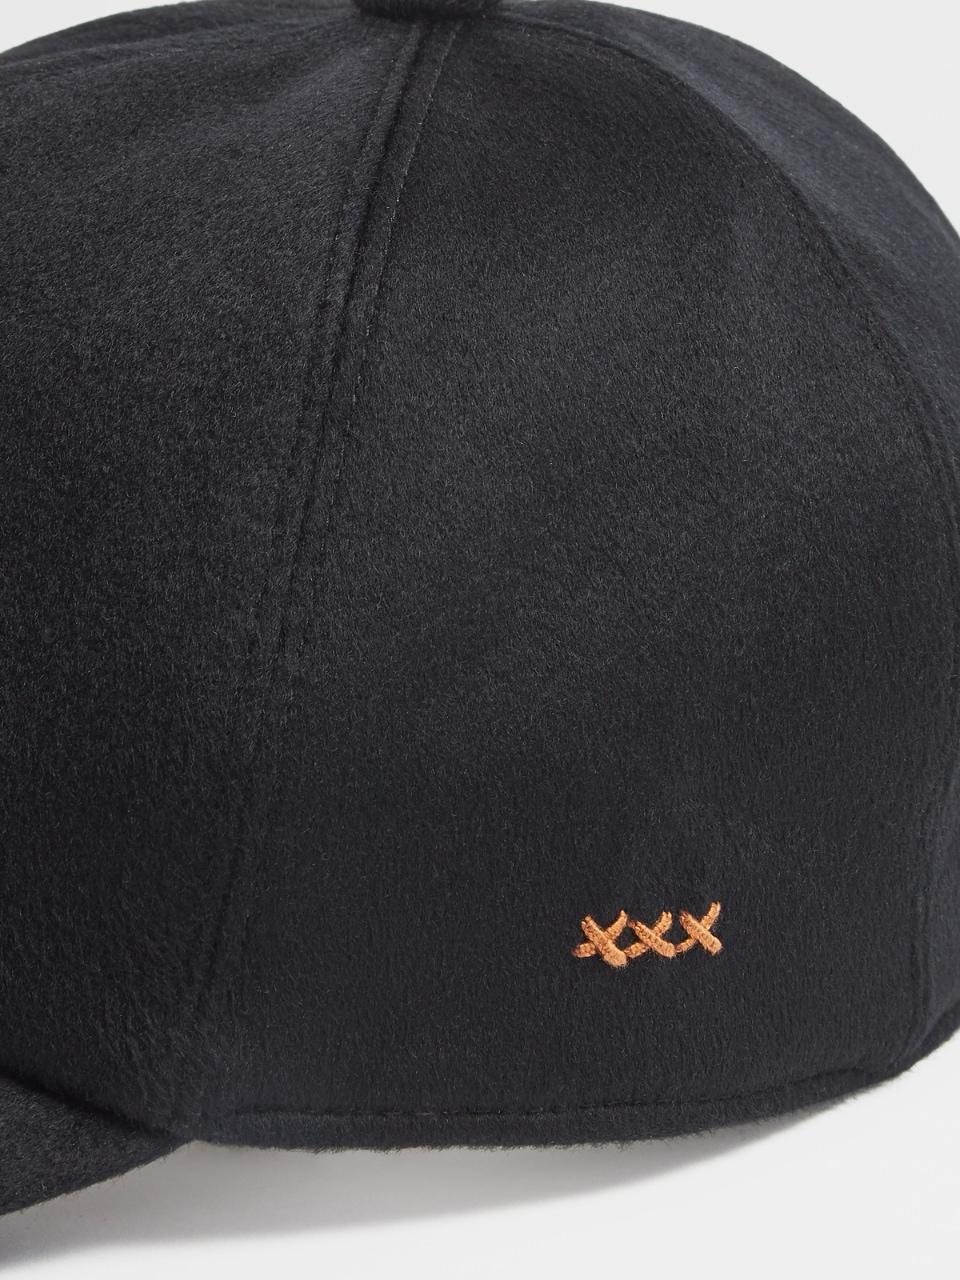 Zegna Xxx Cashmere Cap in Black for Men | Lyst